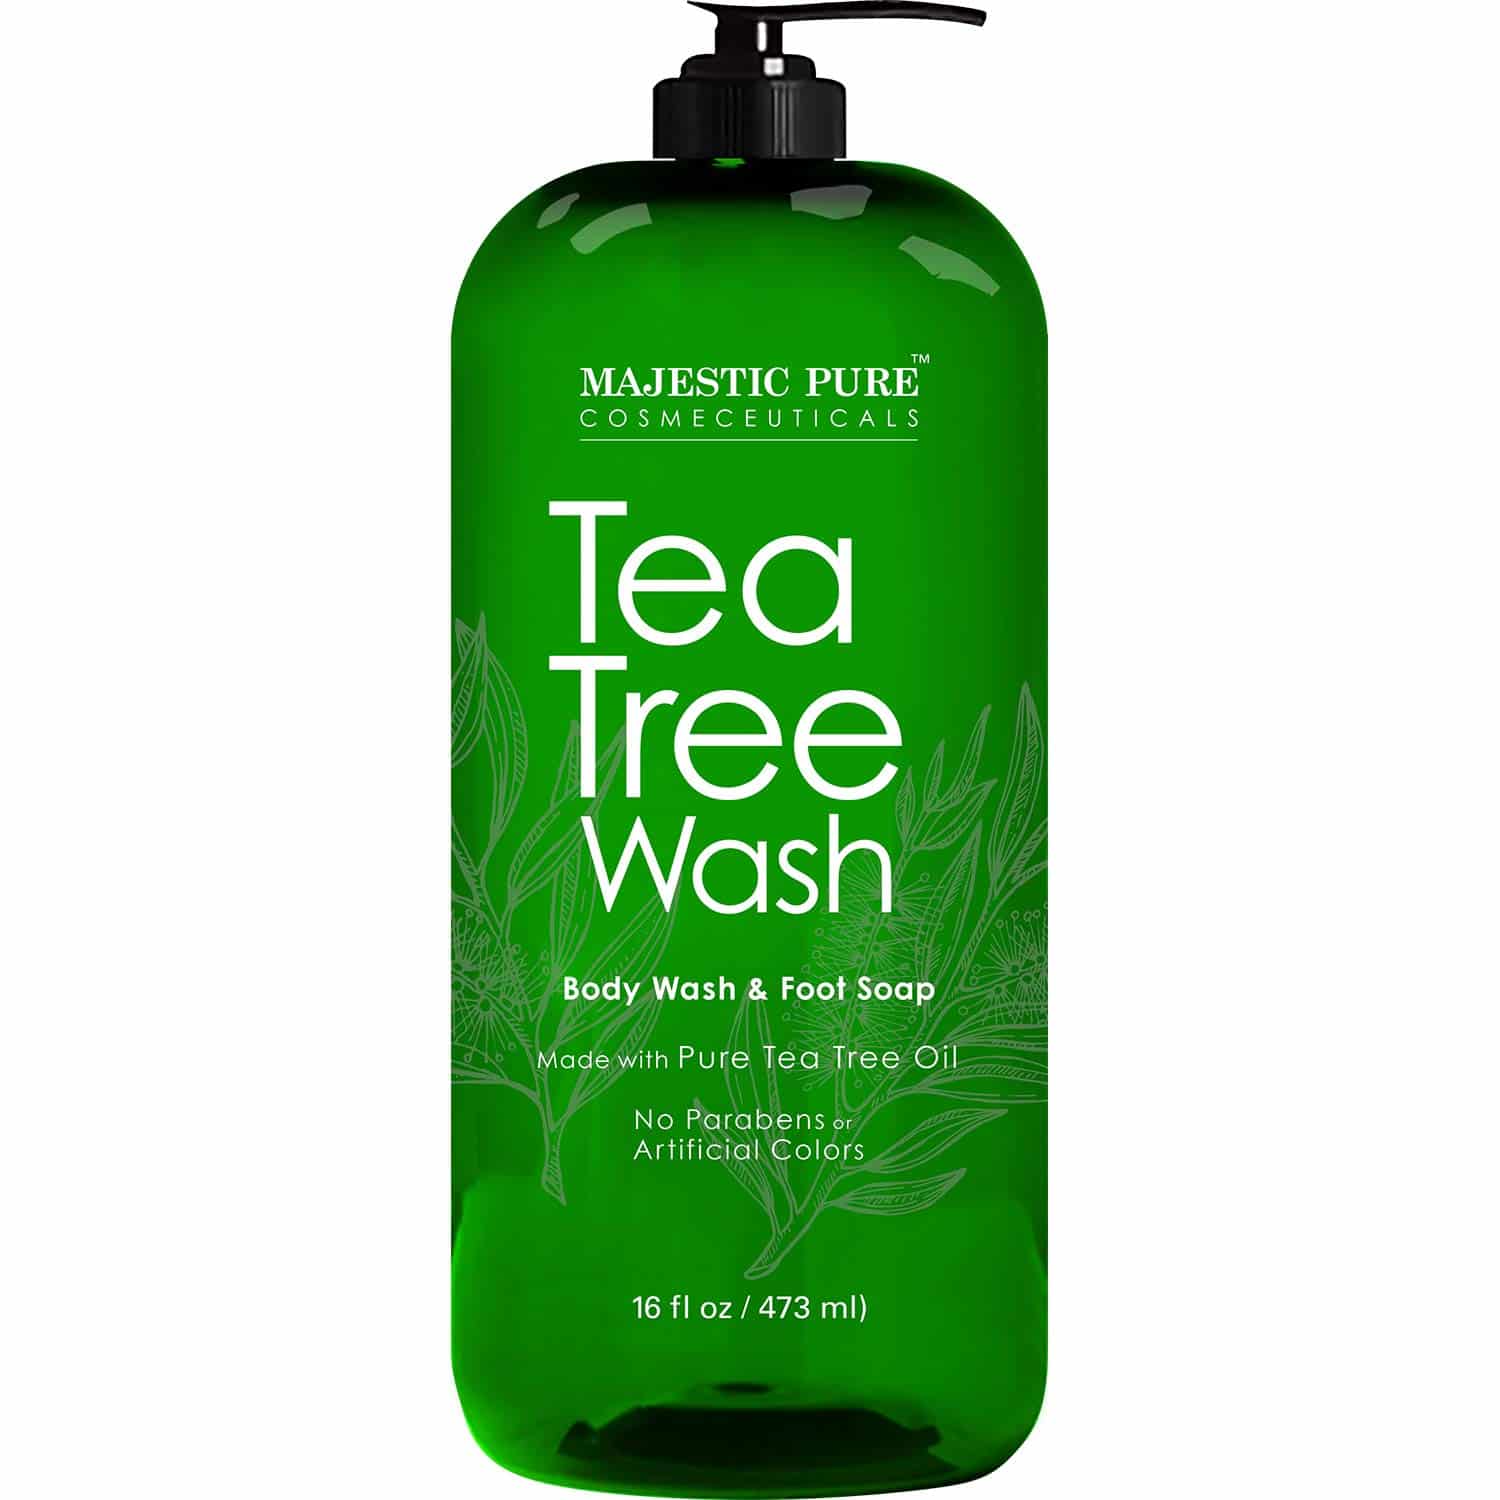 The Best Tea Tree Body Wash for Men in 2020